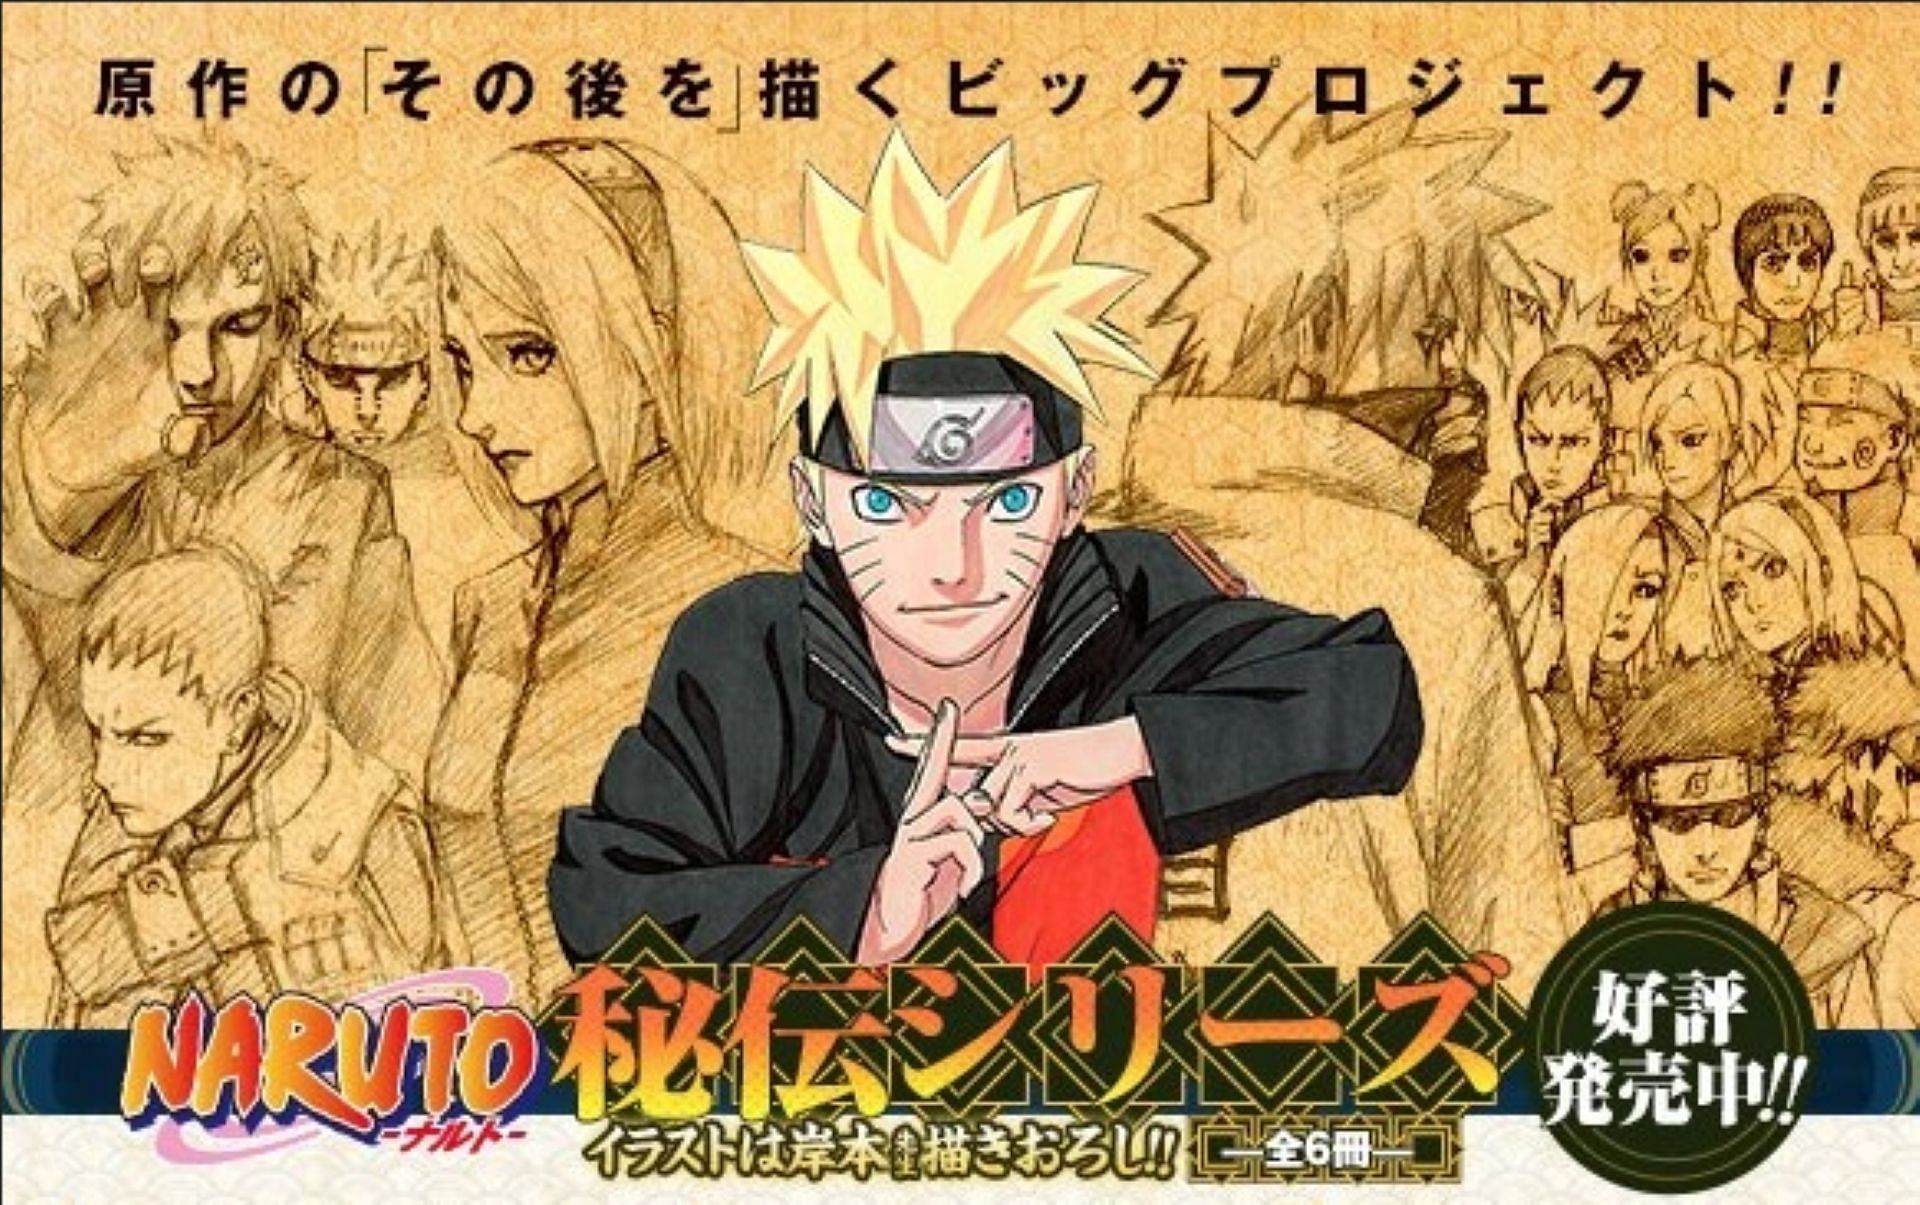 Complete Naruto light novels reading order, explored